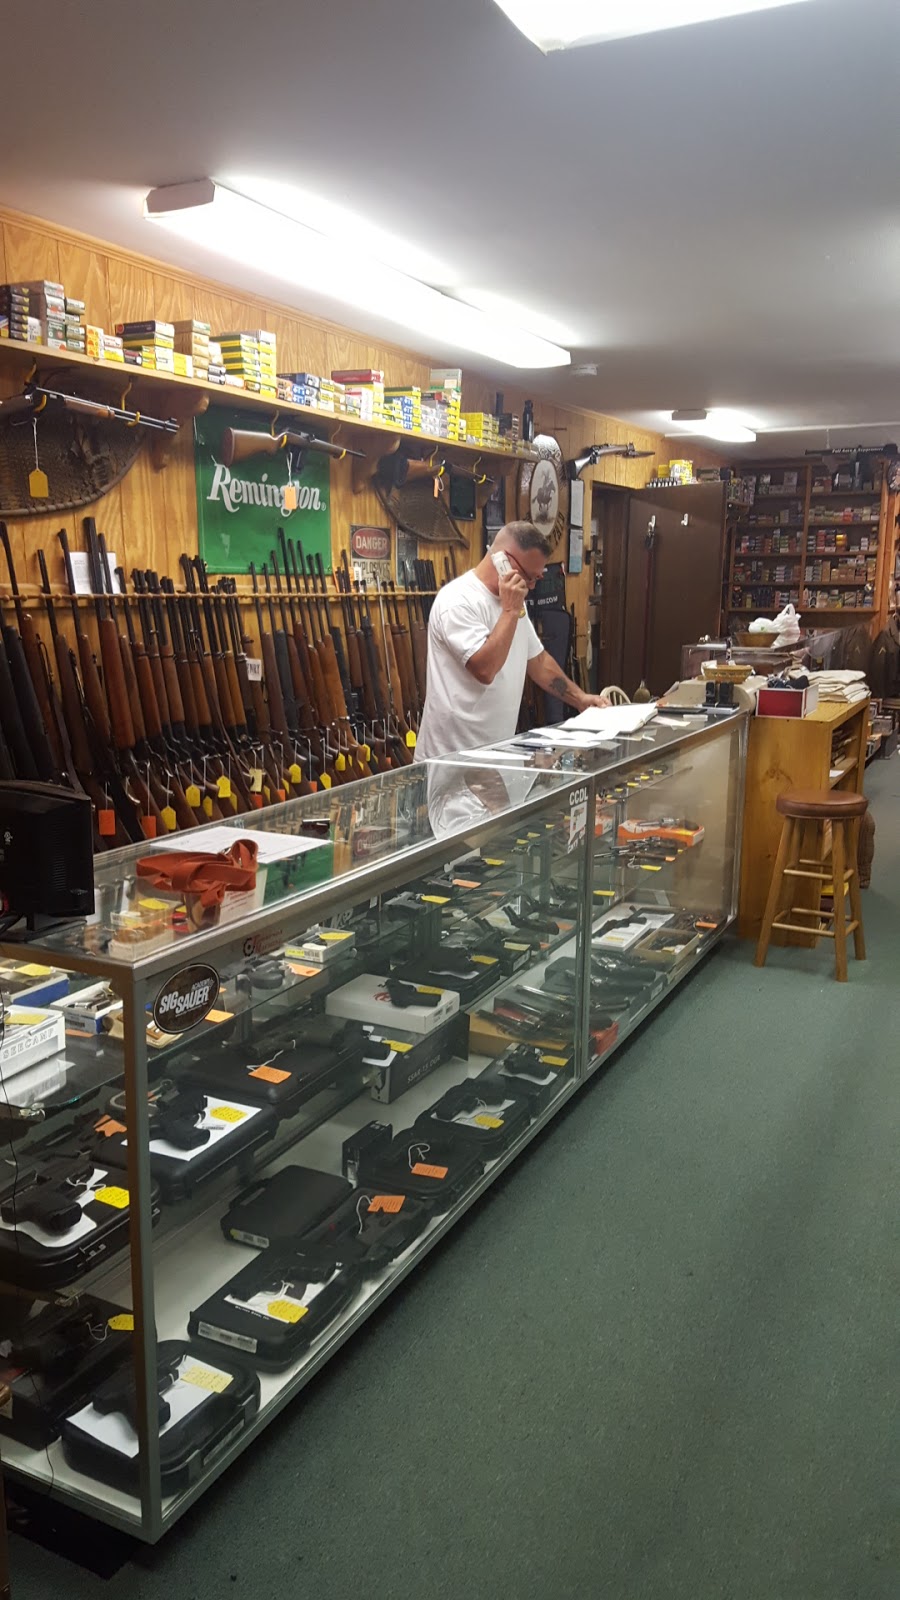 Northeast Sporting Arms LLC - Gun Store Connecticut | 163 Main St, Seymour, CT 06483 | Phone: (203) 888-0047